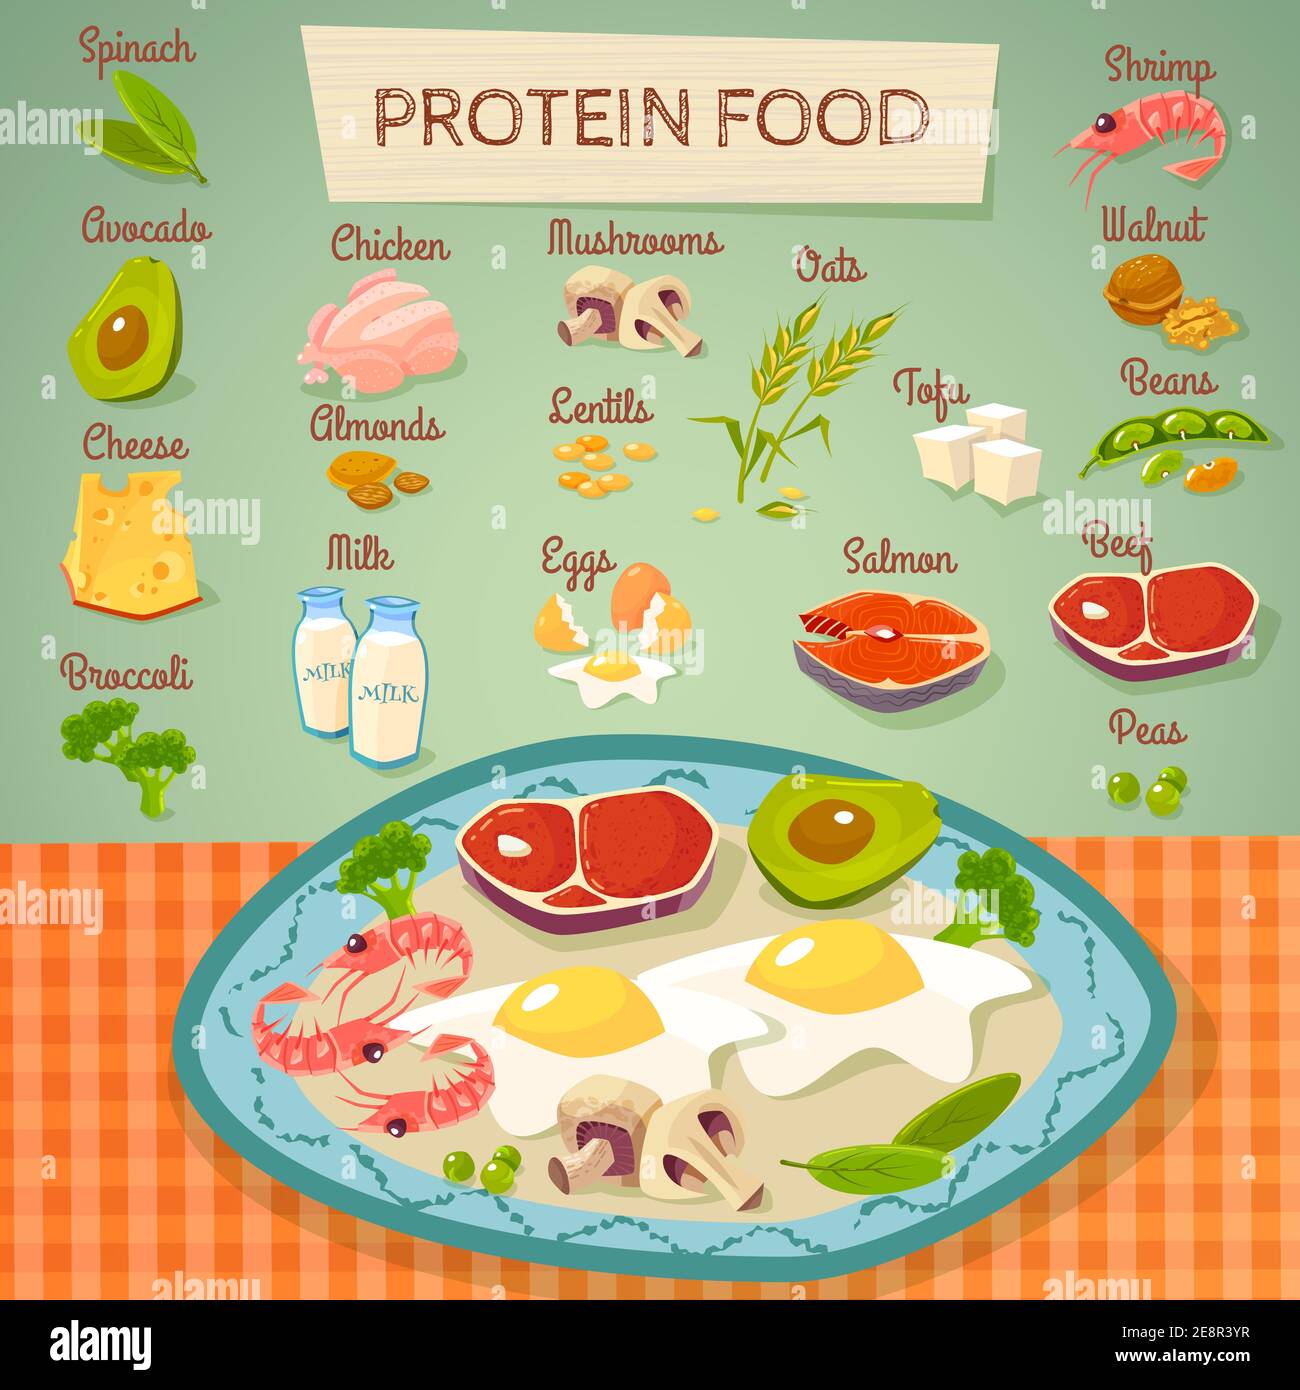 protein rich food